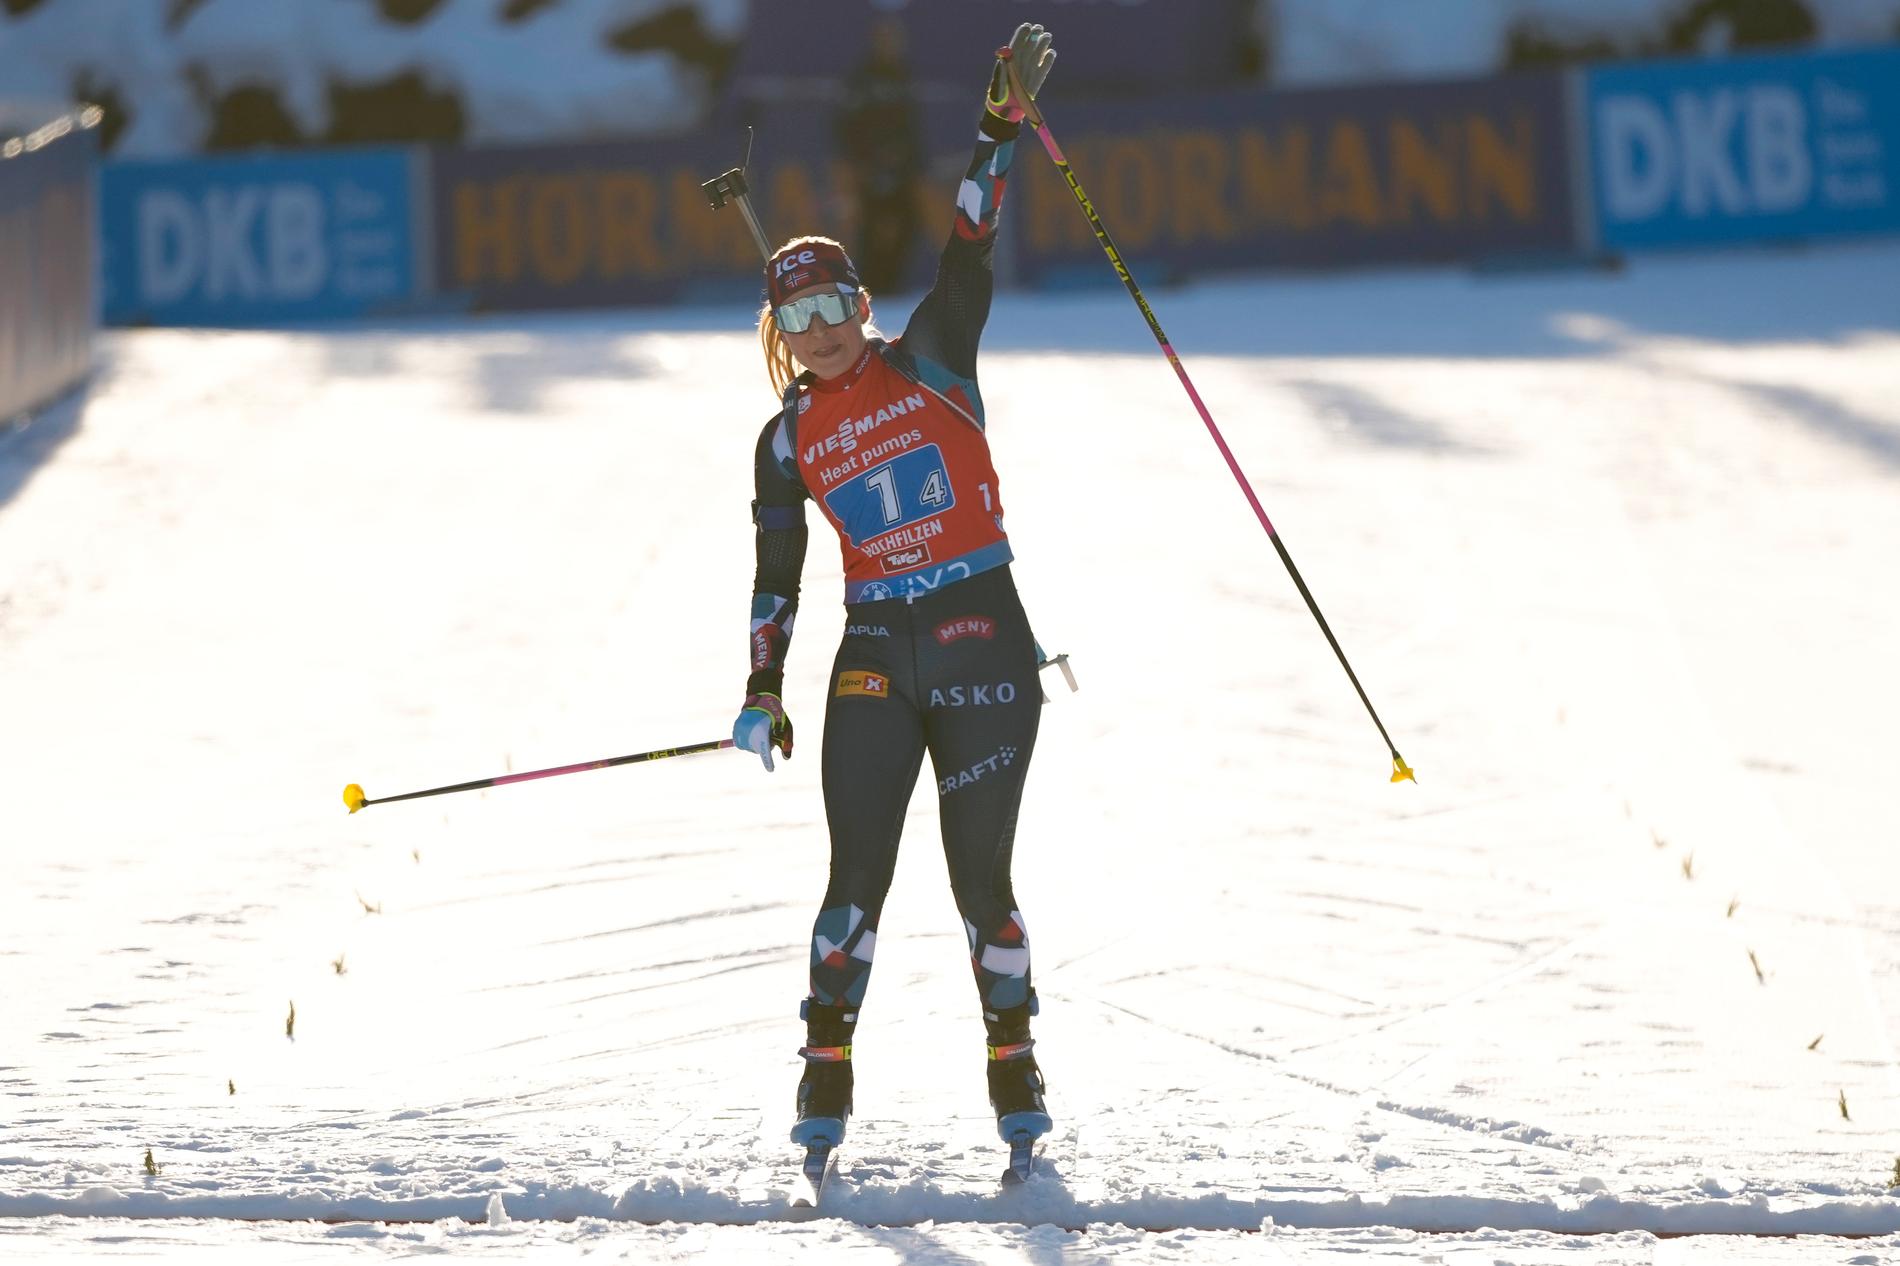 Complete Norwegian control in Hochfilzen – women take double relay win